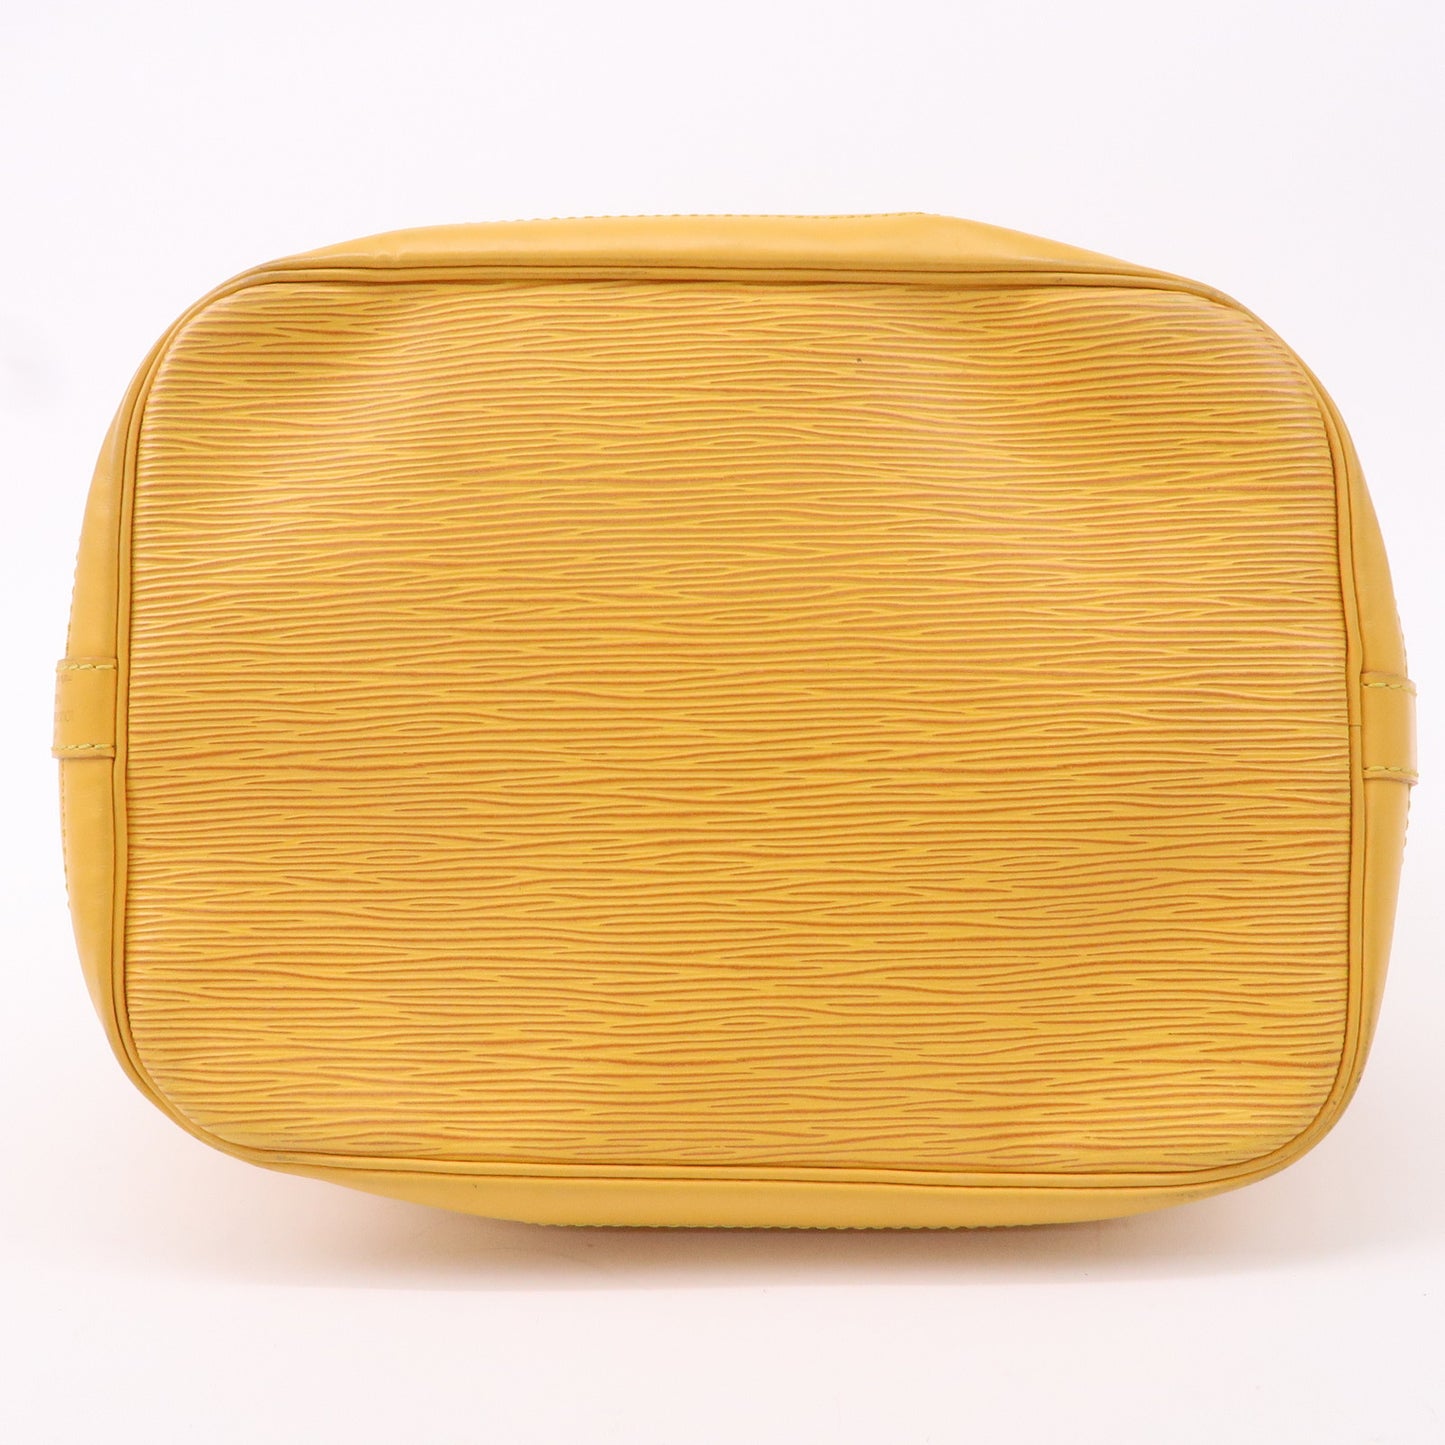 Louis Vuitton Epi Leather Noe Shoulder Bag Tassili Yellow M44009